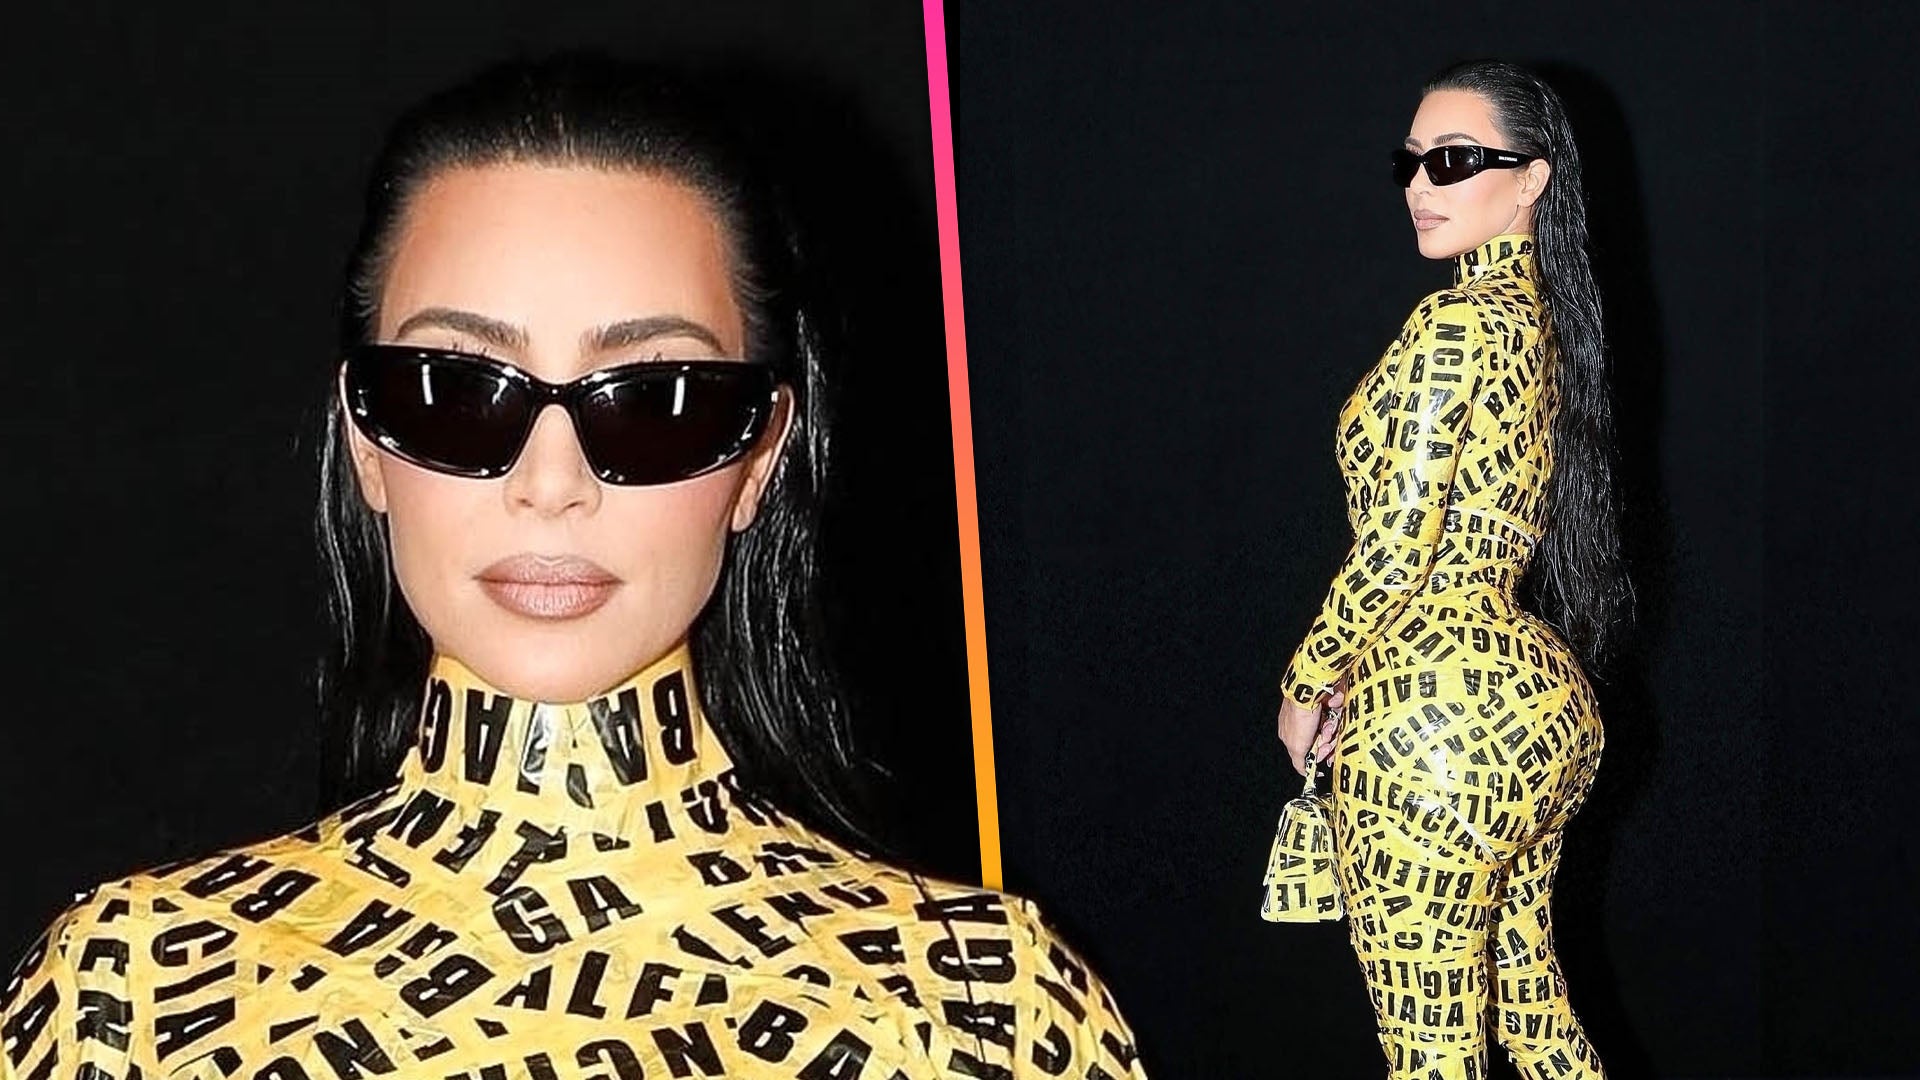 Sunglass trends, Kim Kardashian